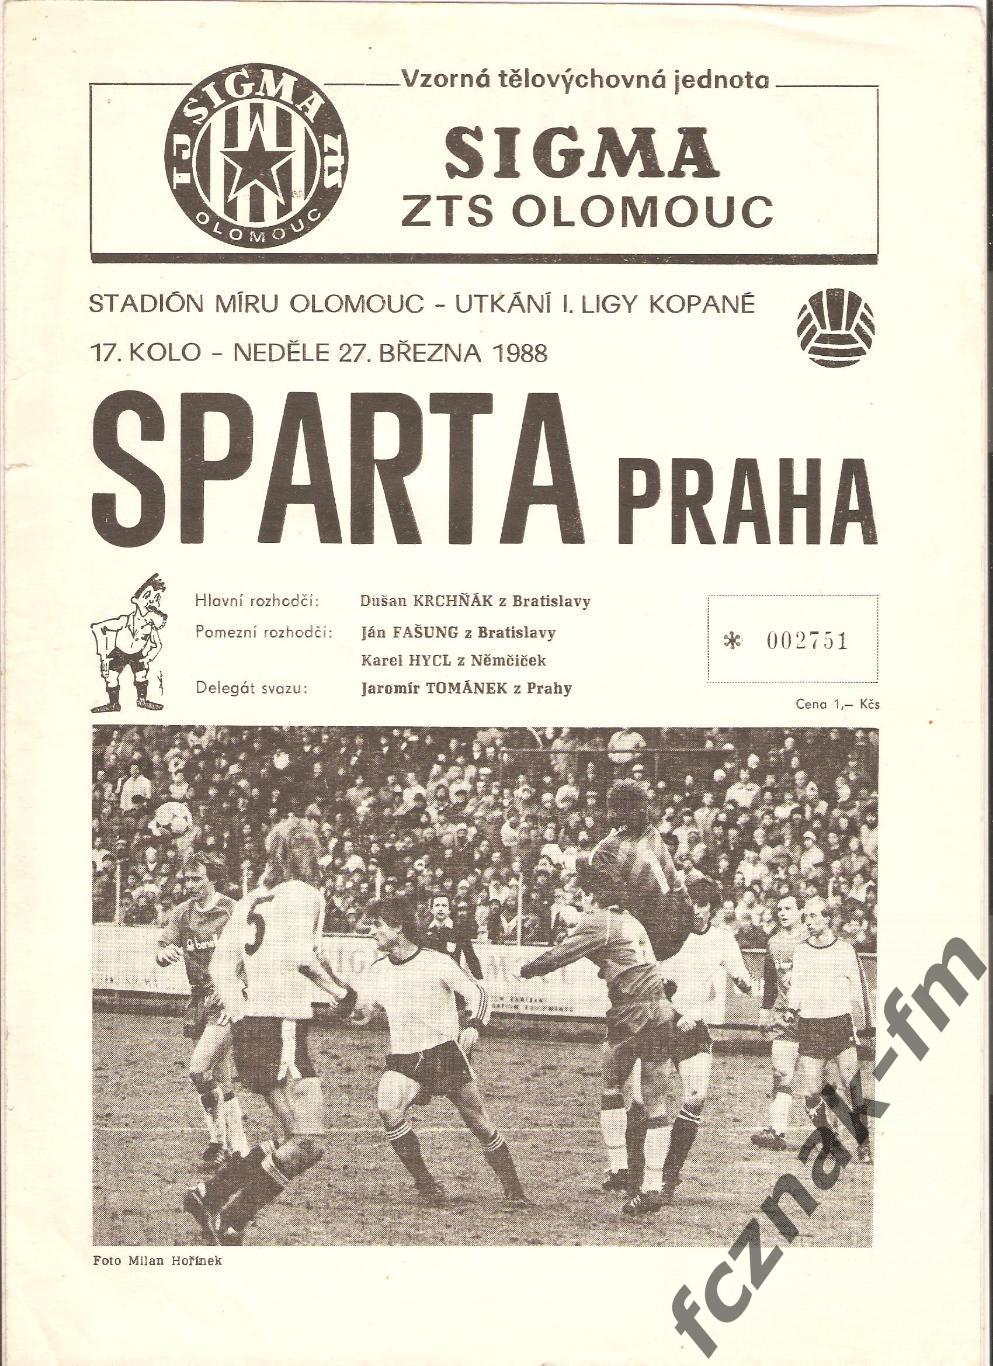 Чехословакия Сигма Оломоуц Спарта Прага Sigma Olomouc Sparta Praha 1988